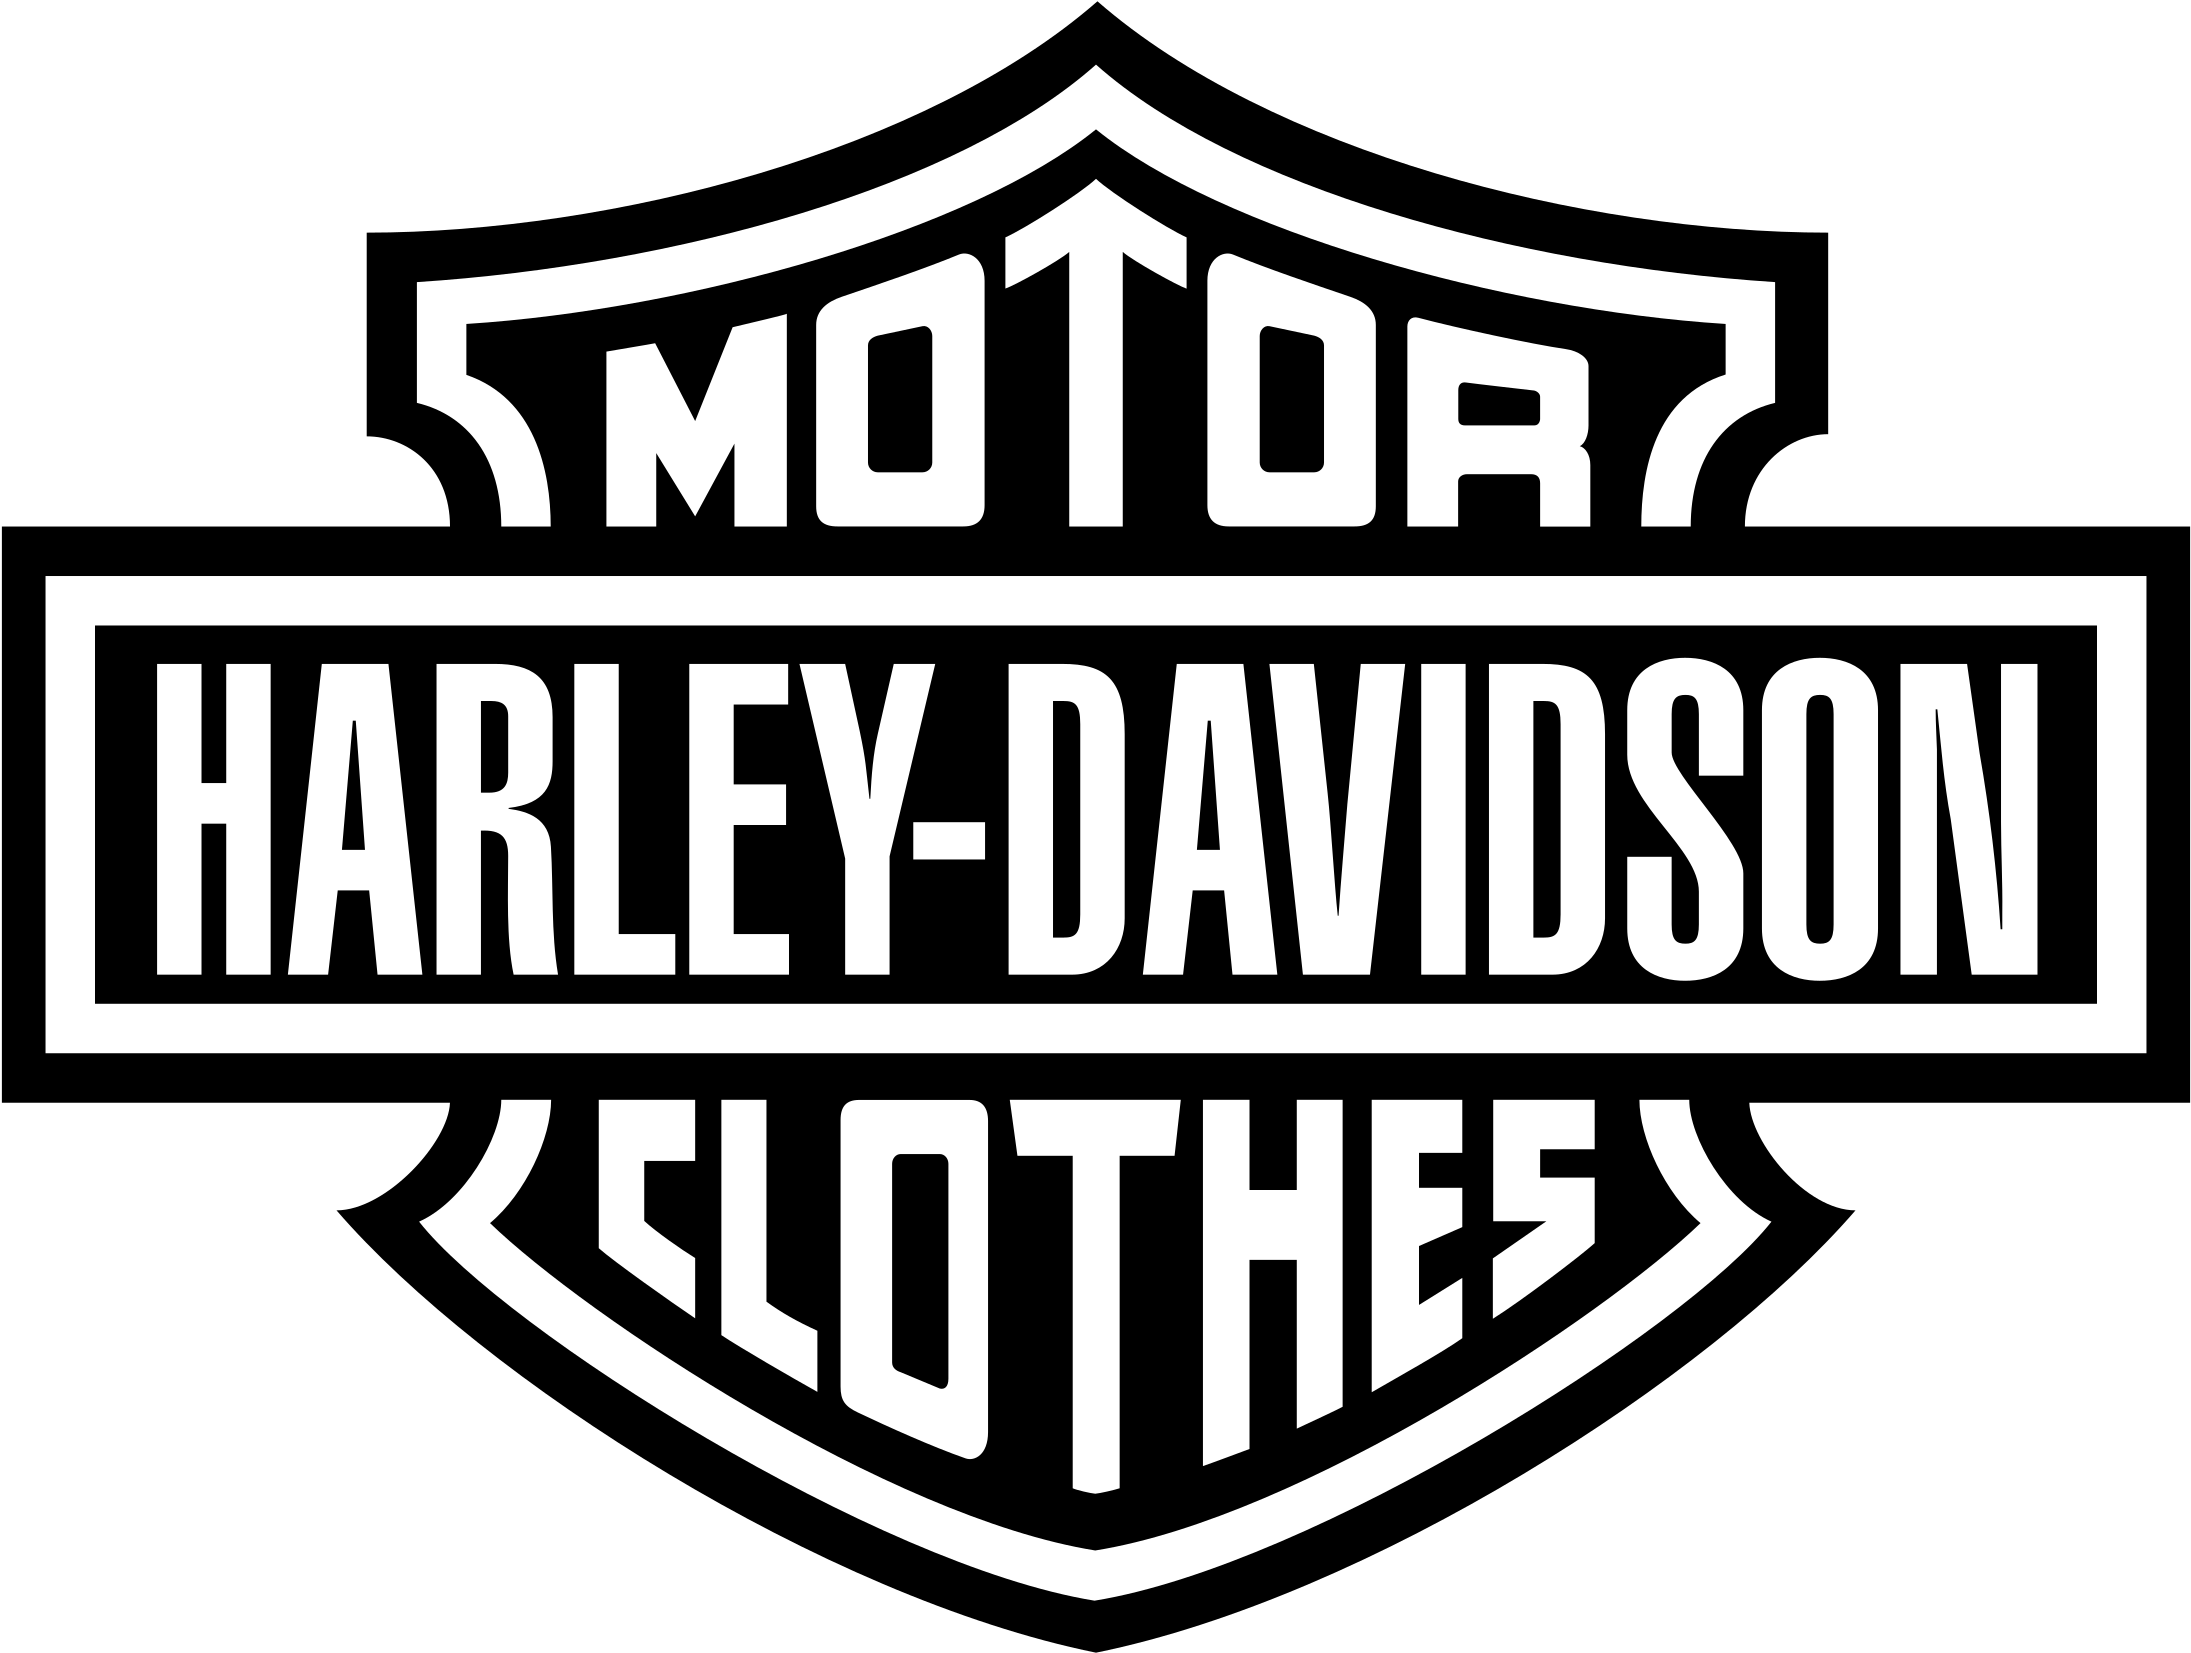 Harley Davidson Logos Transparent Images